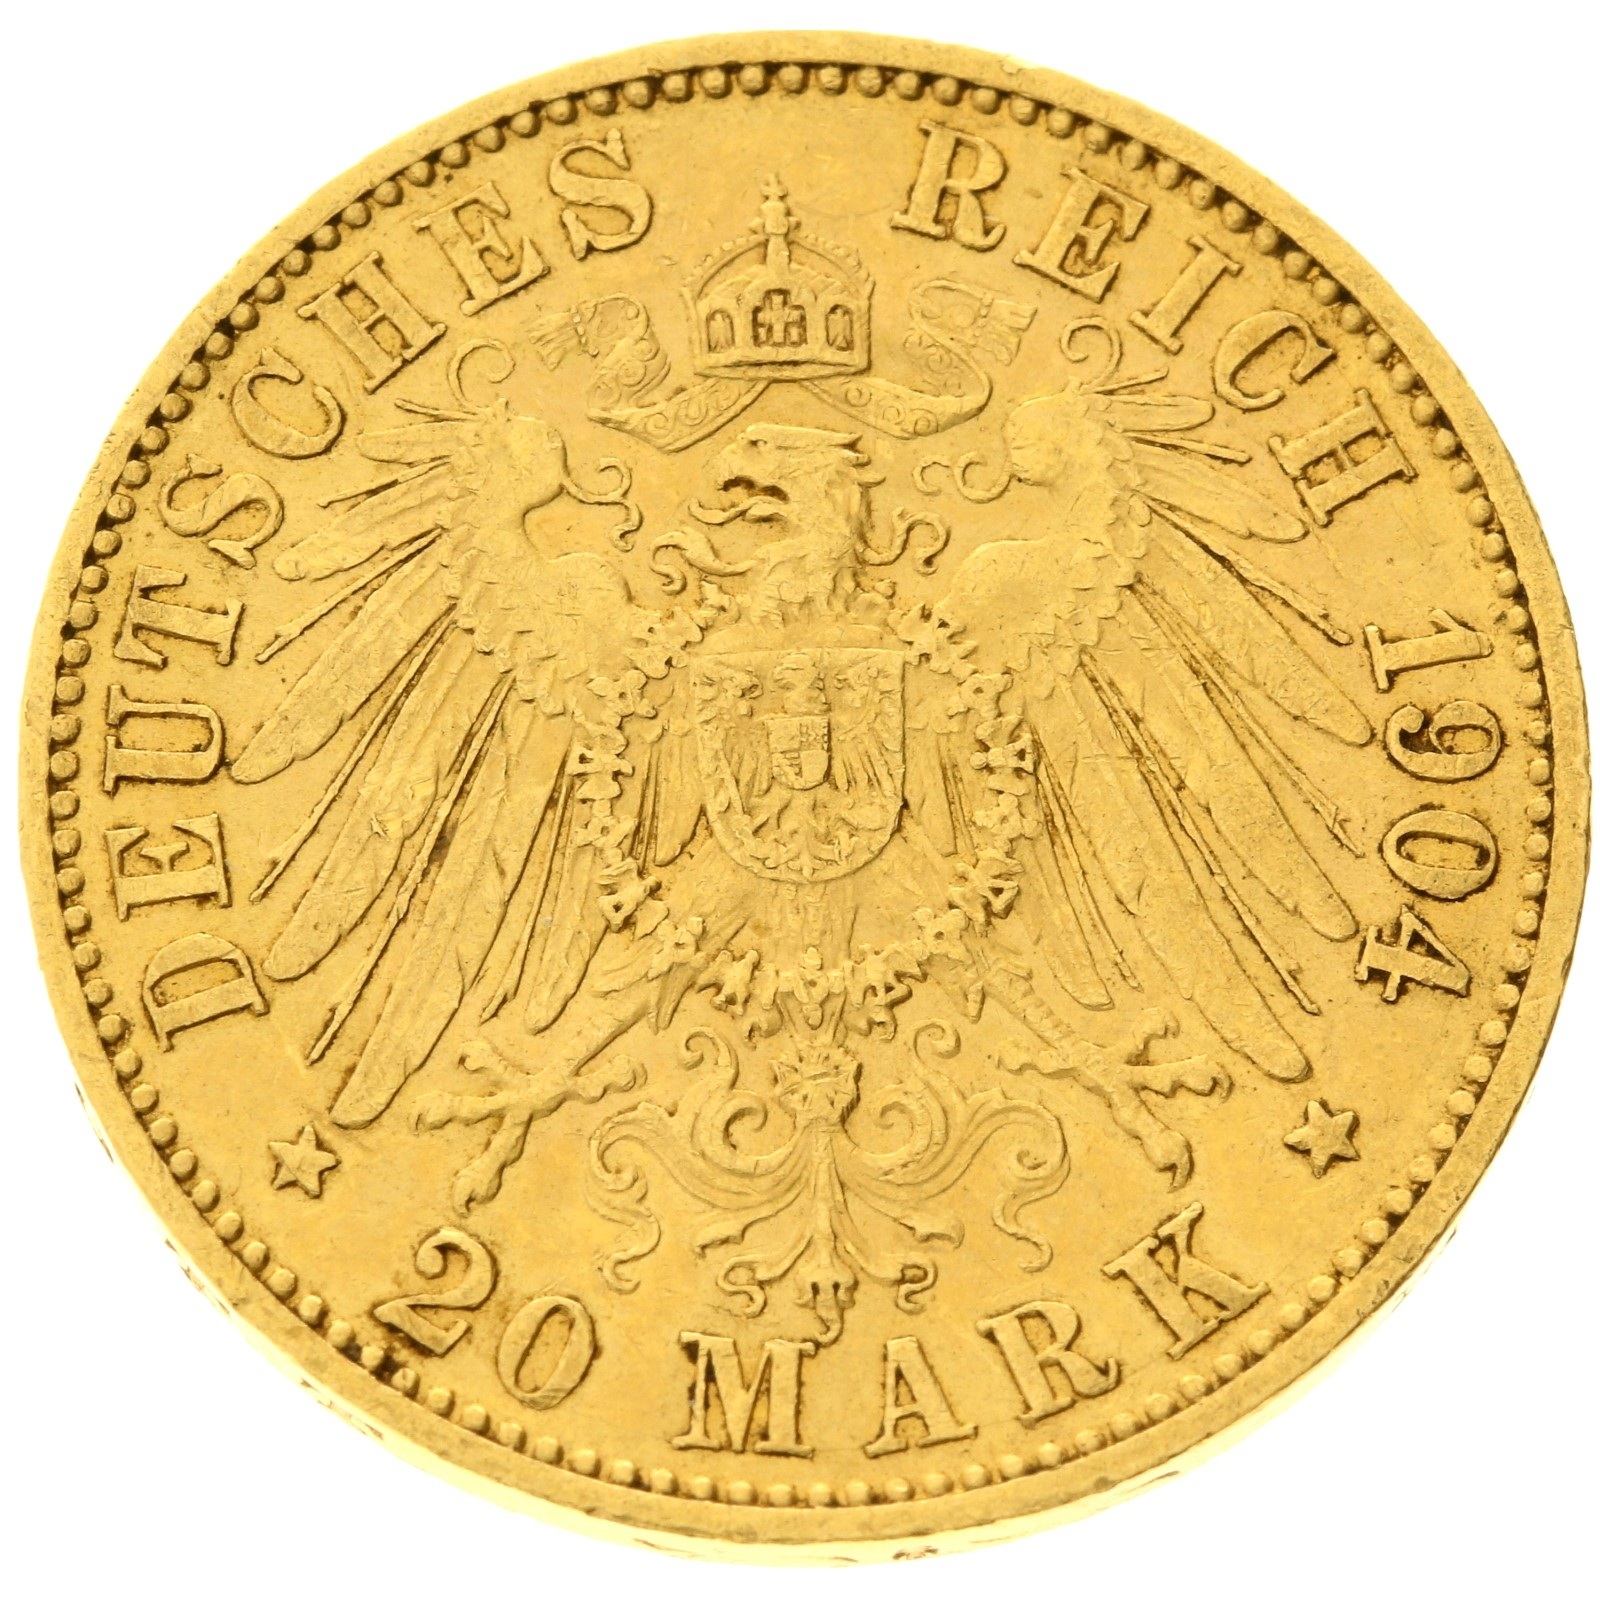 Germany - Prussia - 20 mark - 1904 - A - Wilhelm II 